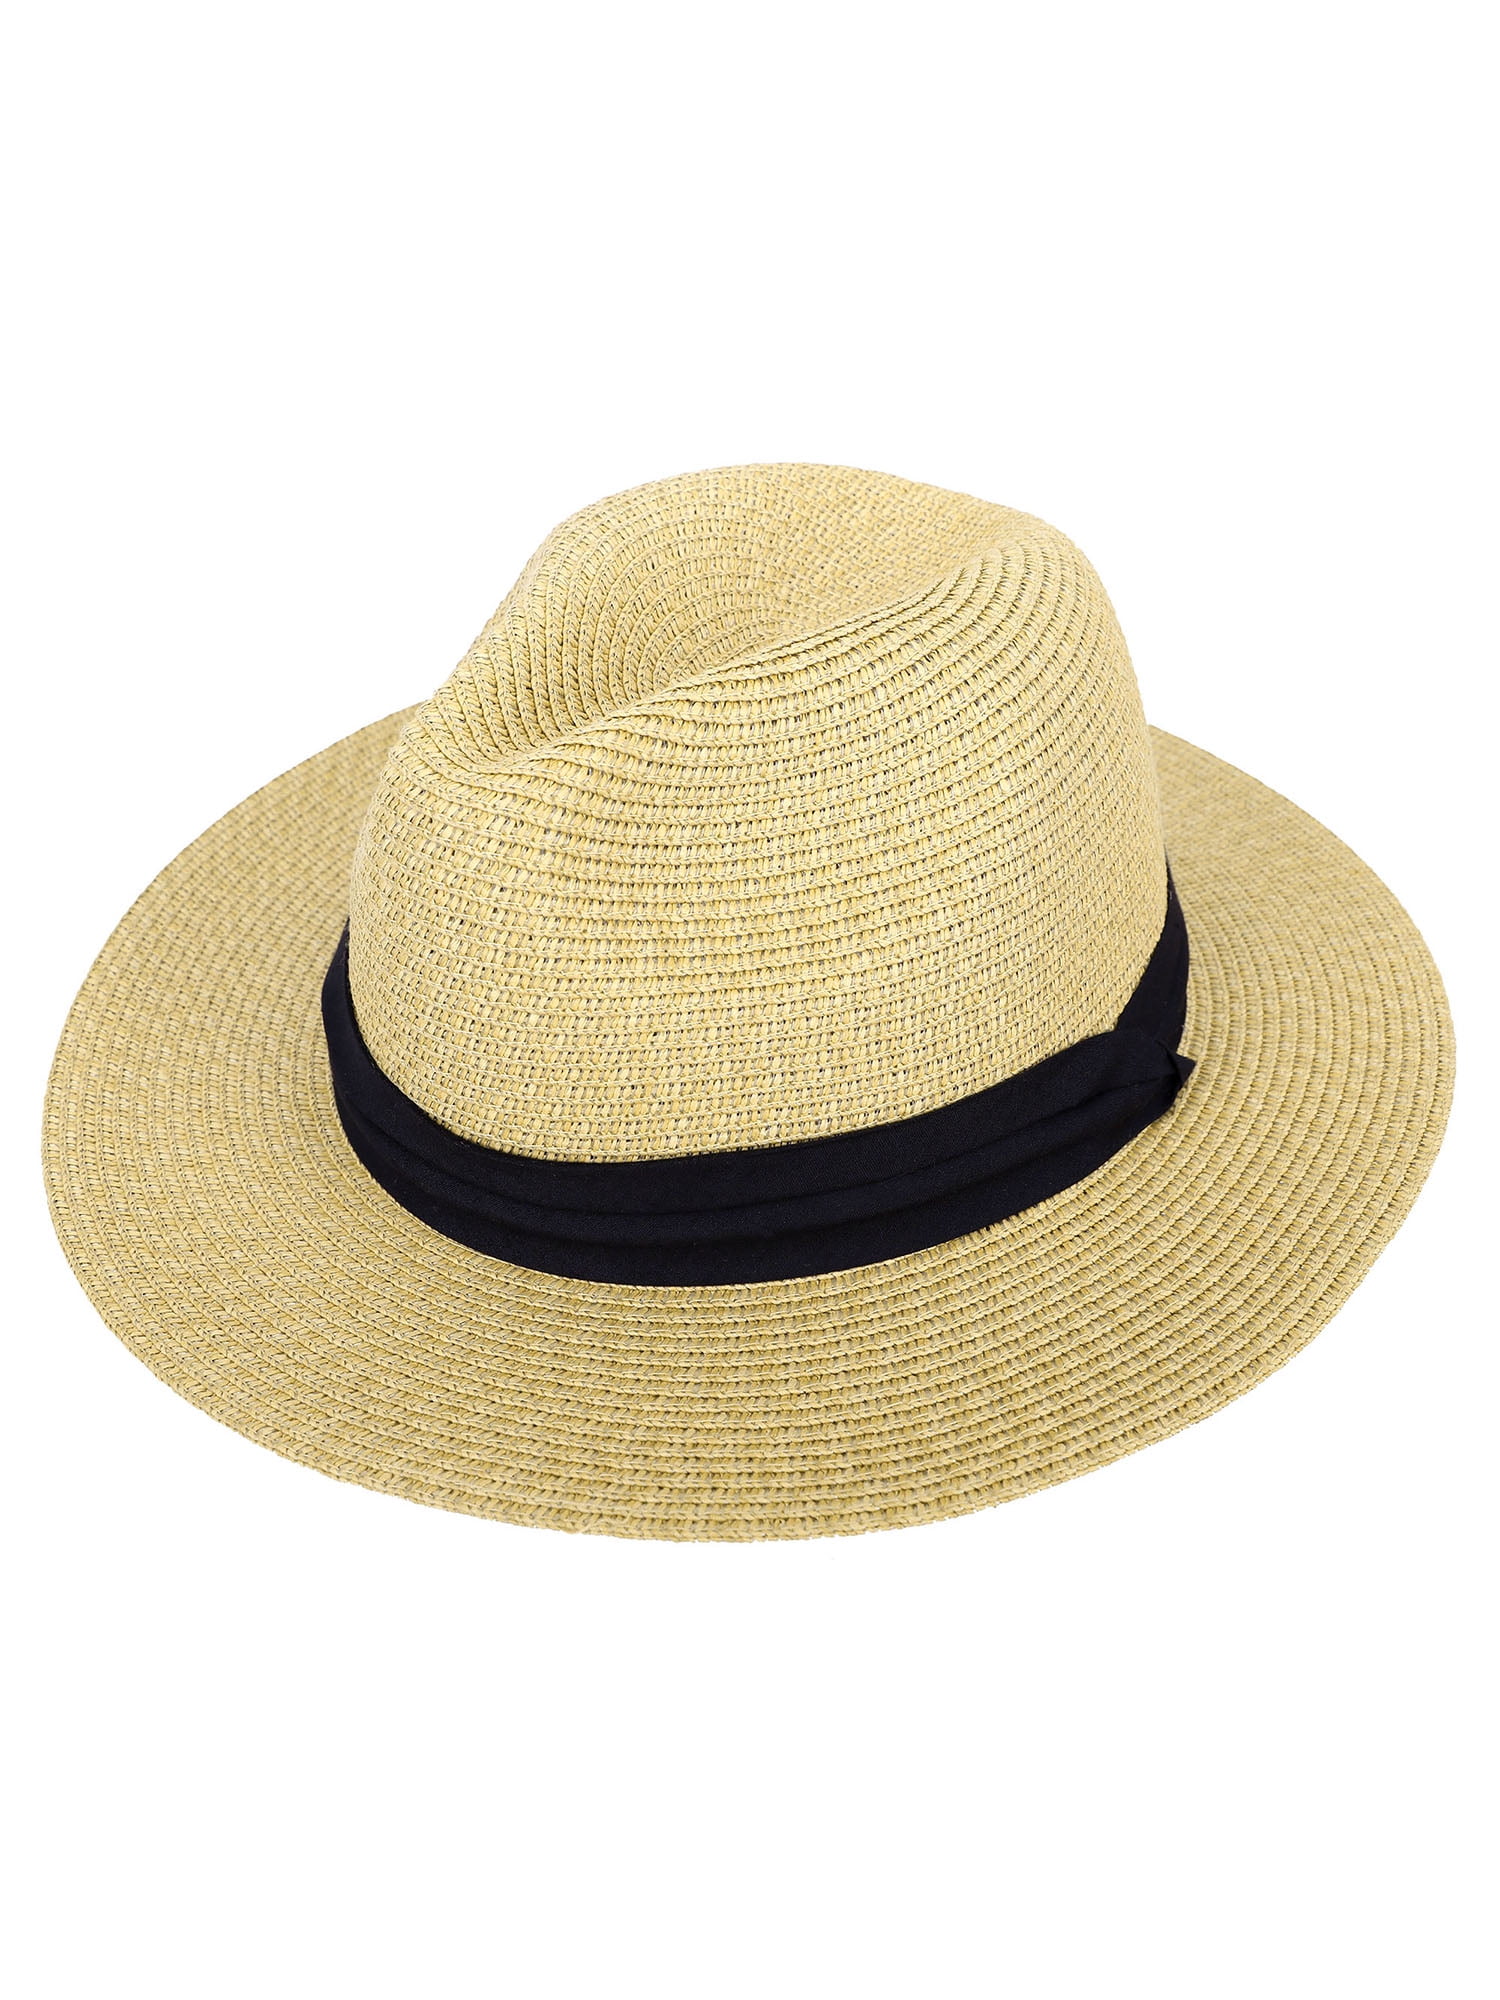 Cool Men Women Boy Girl Summer Cowboy hat Beach Sun Hat Straw Derby Cap 